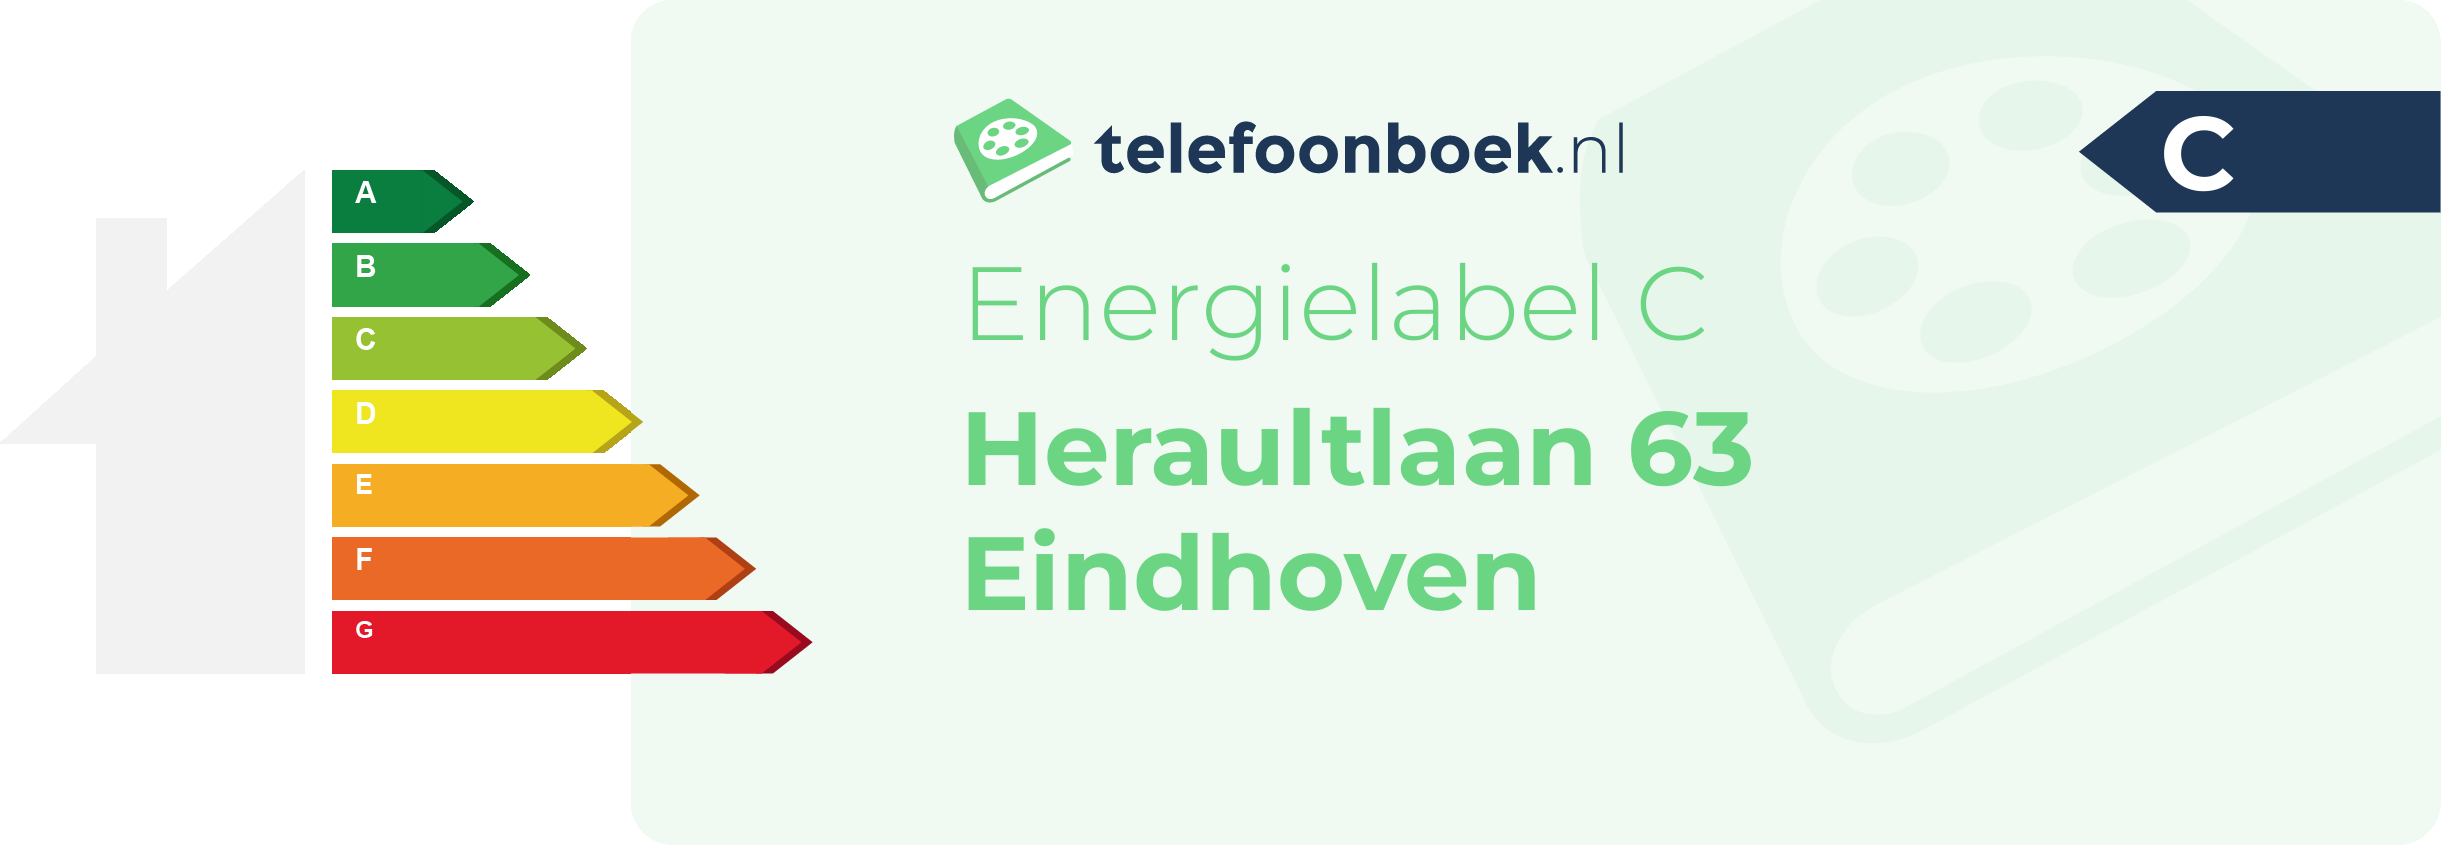 Energielabel Heraultlaan 63 Eindhoven